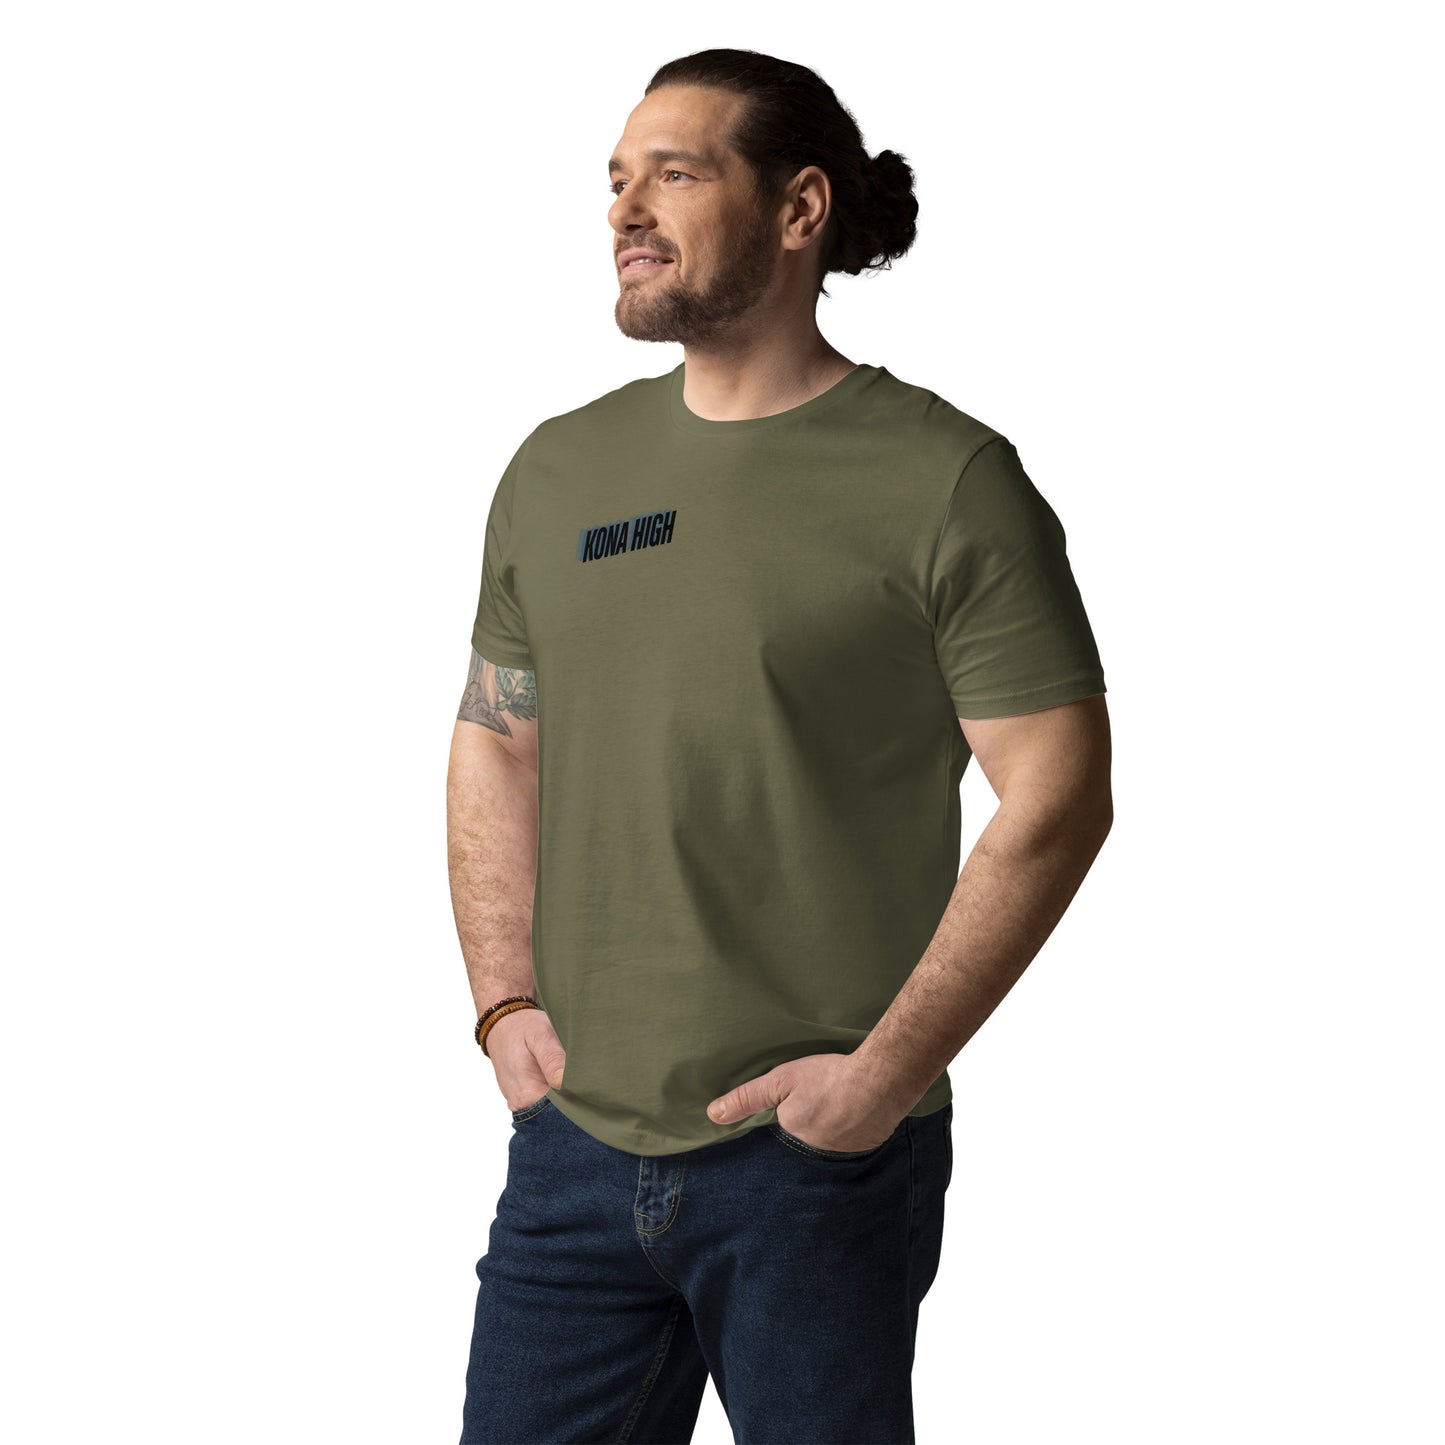 Kona High Men's T-Shirt